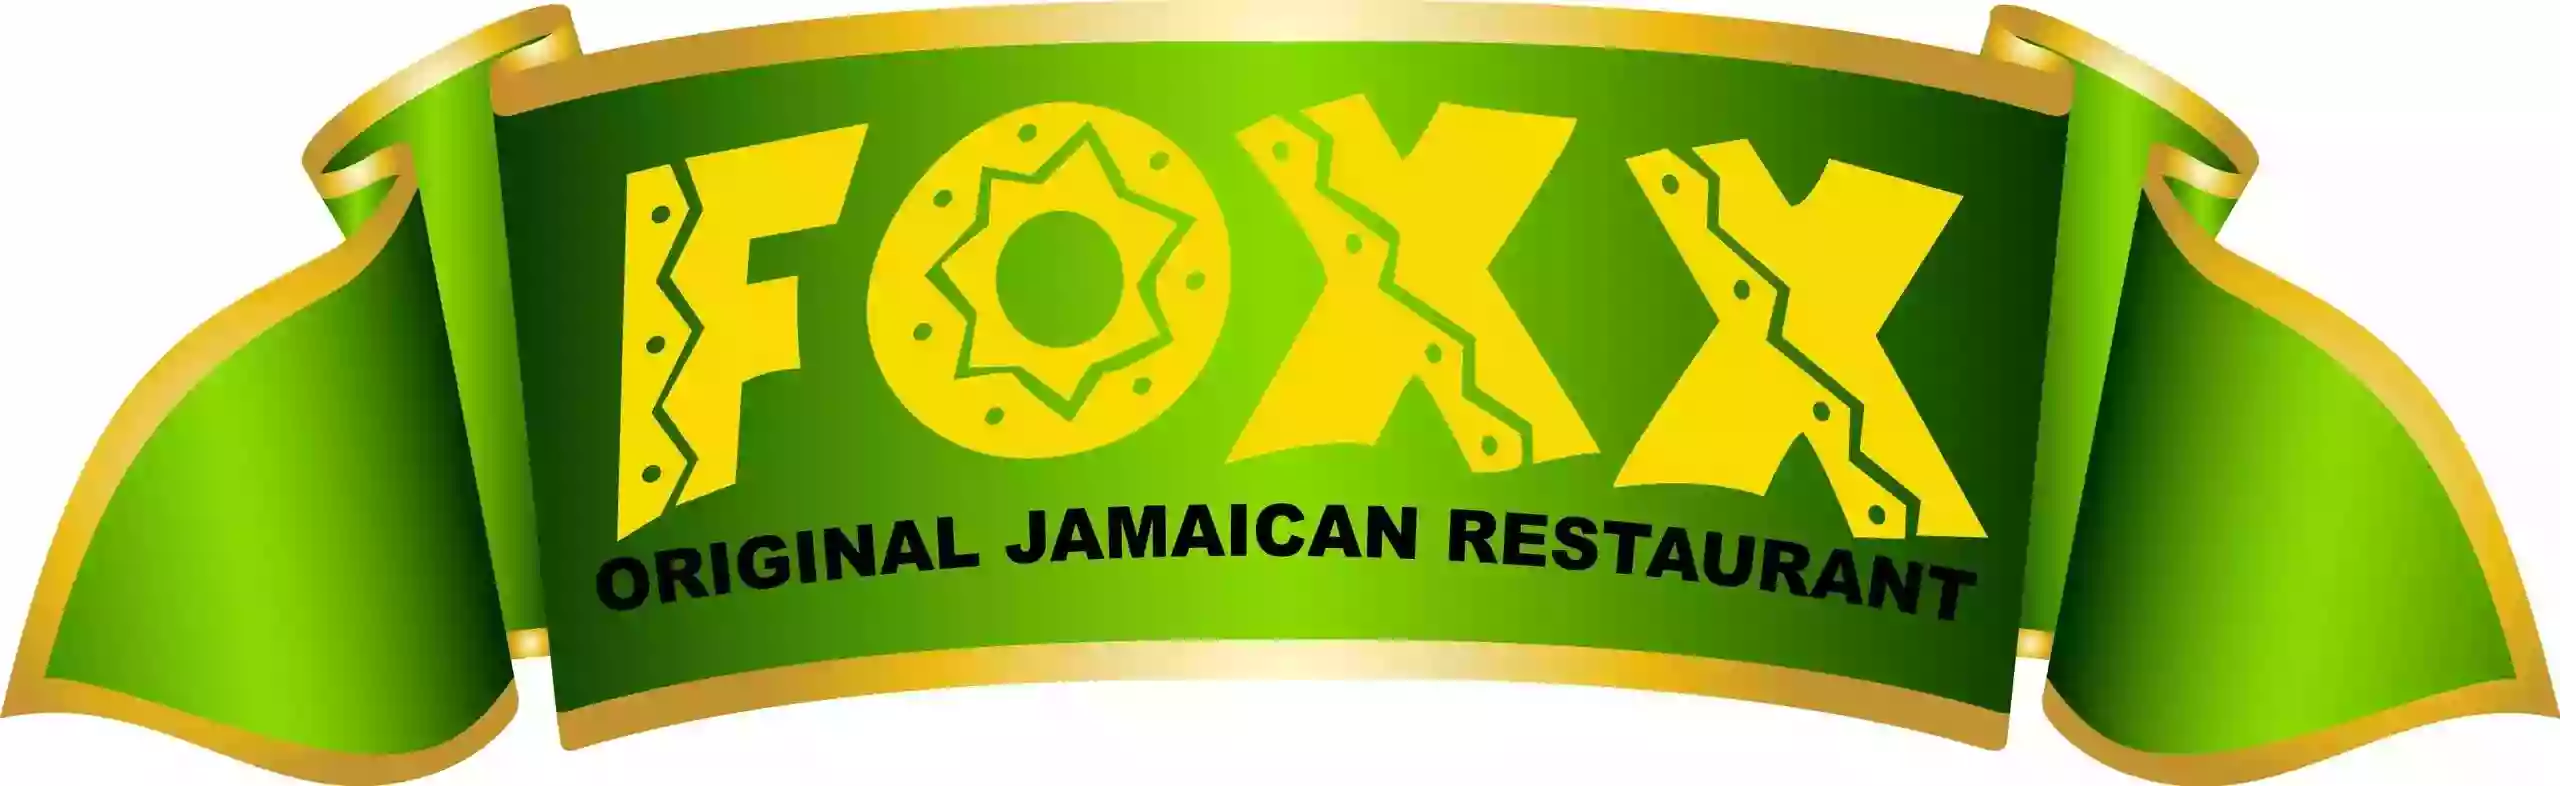 Foxx Original Jamaican Restaurant